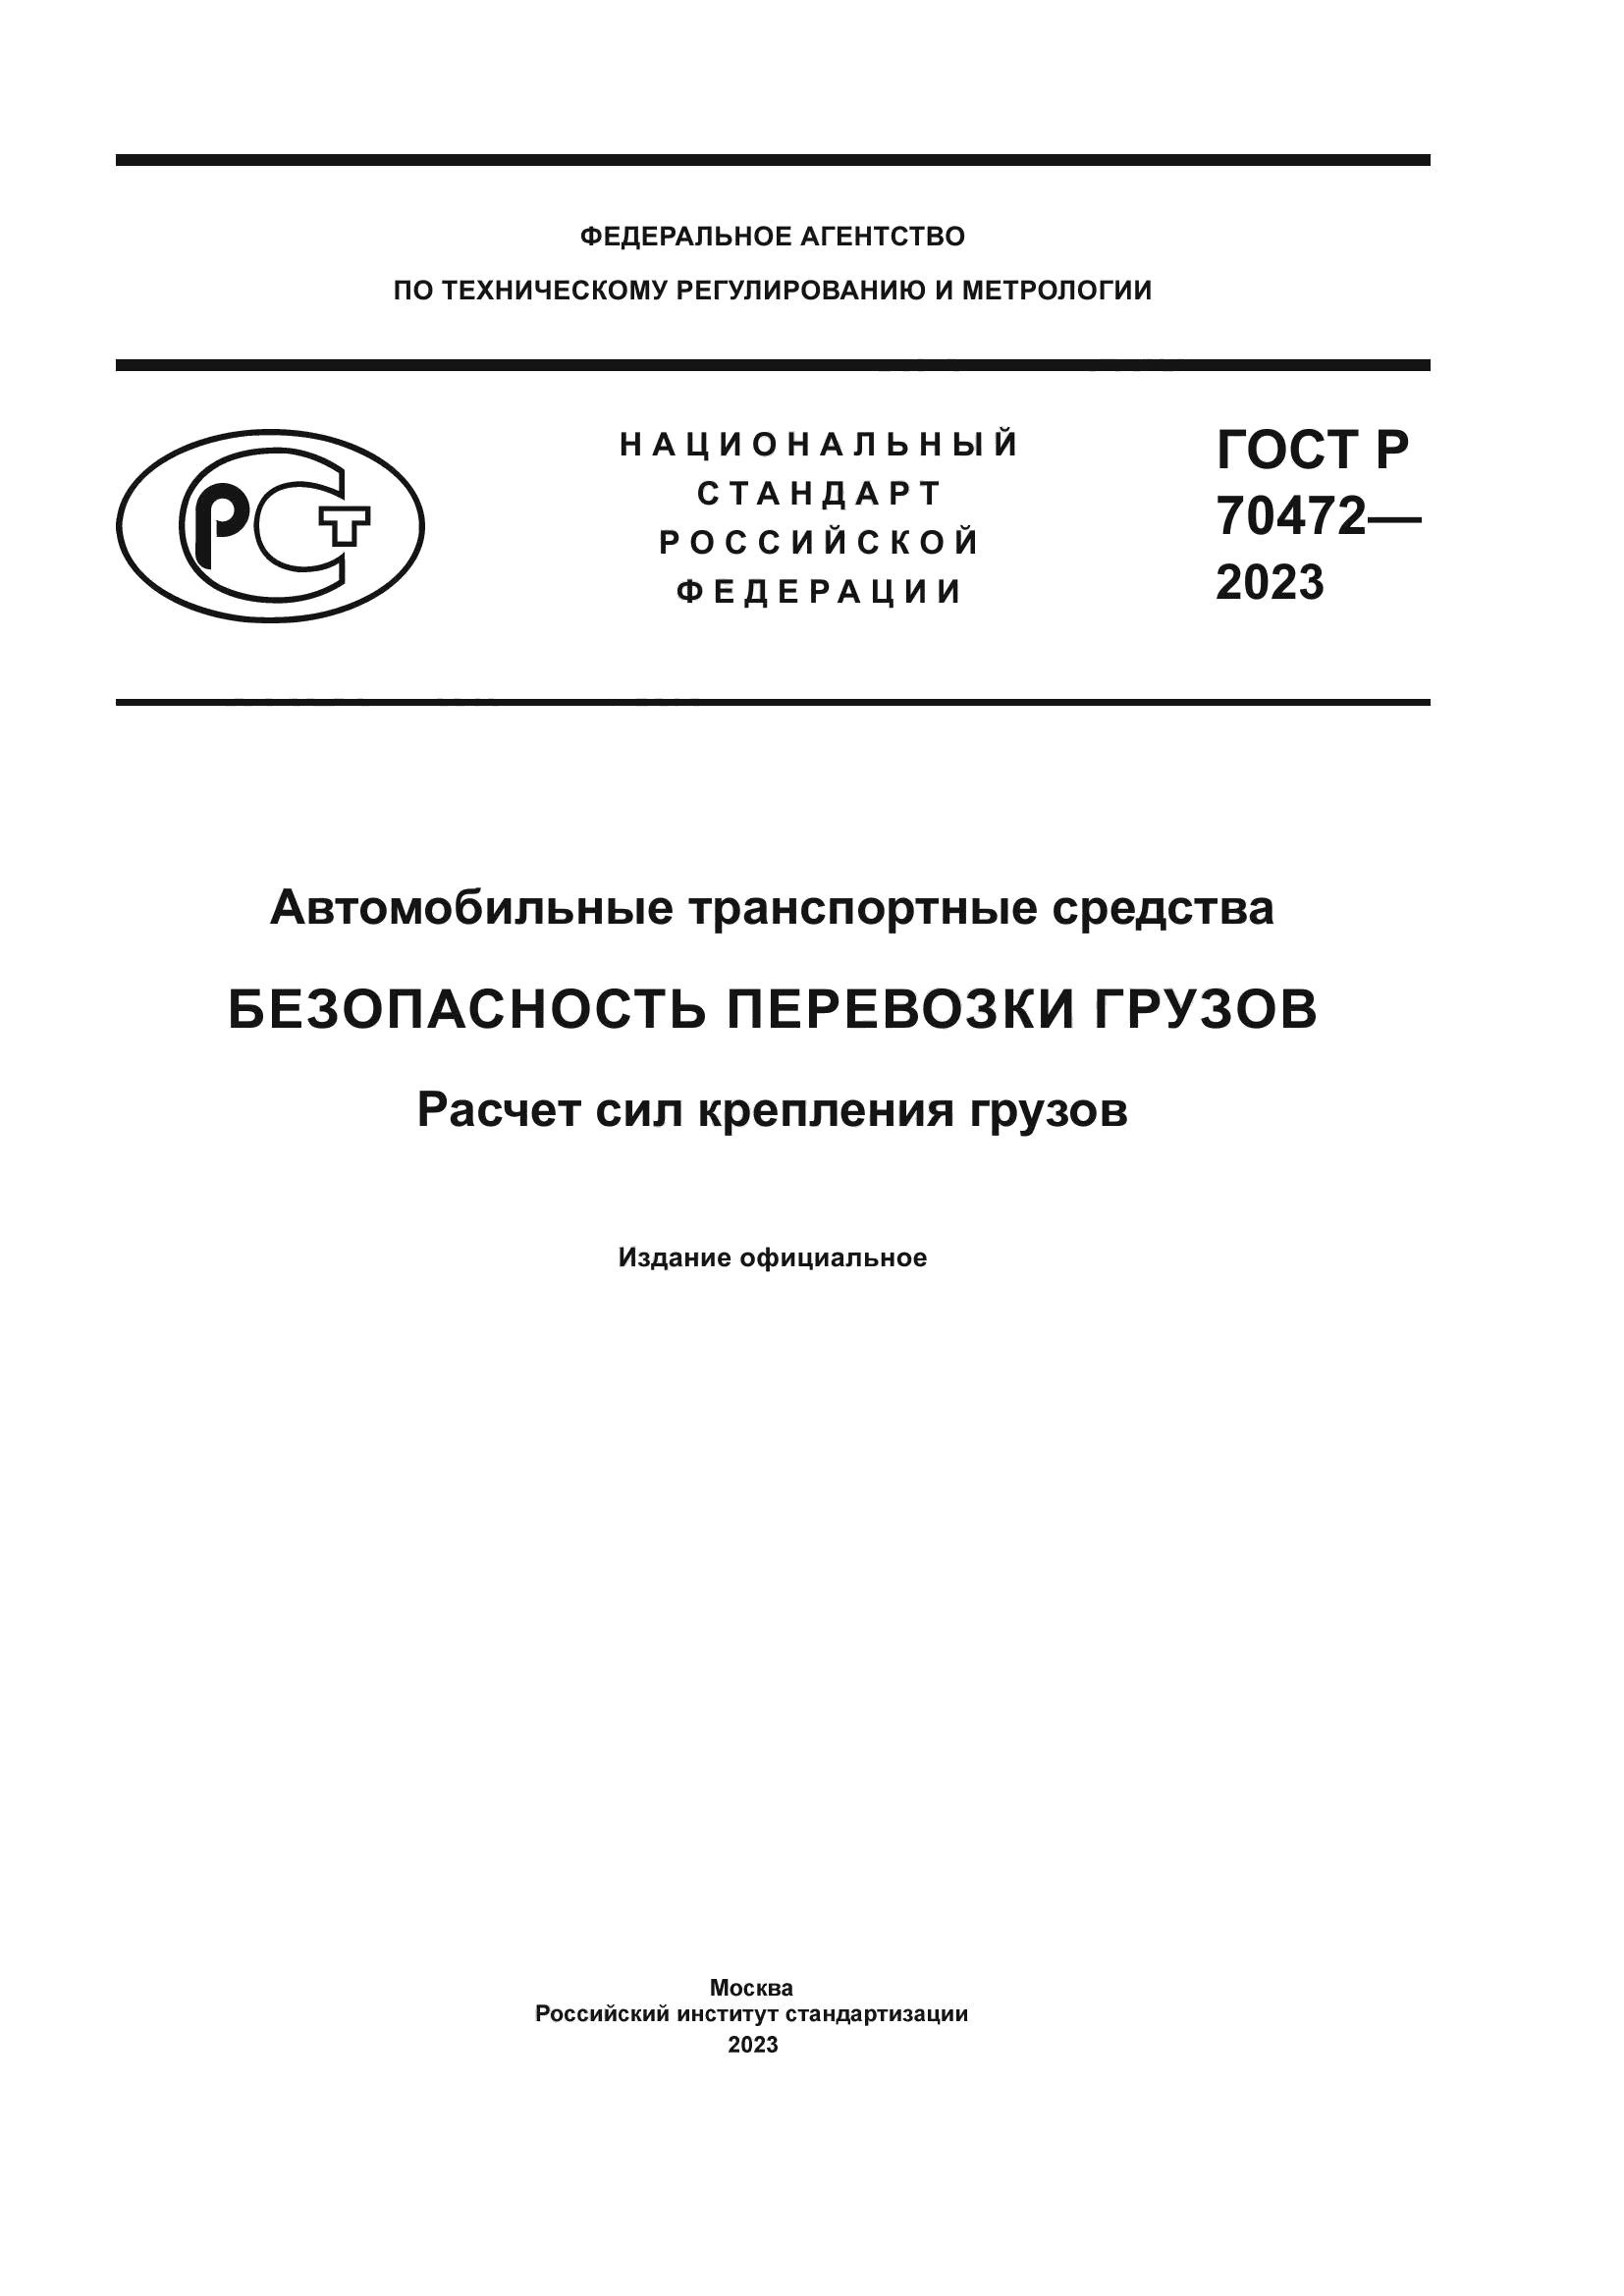 ГОСТ Р 70472-2023